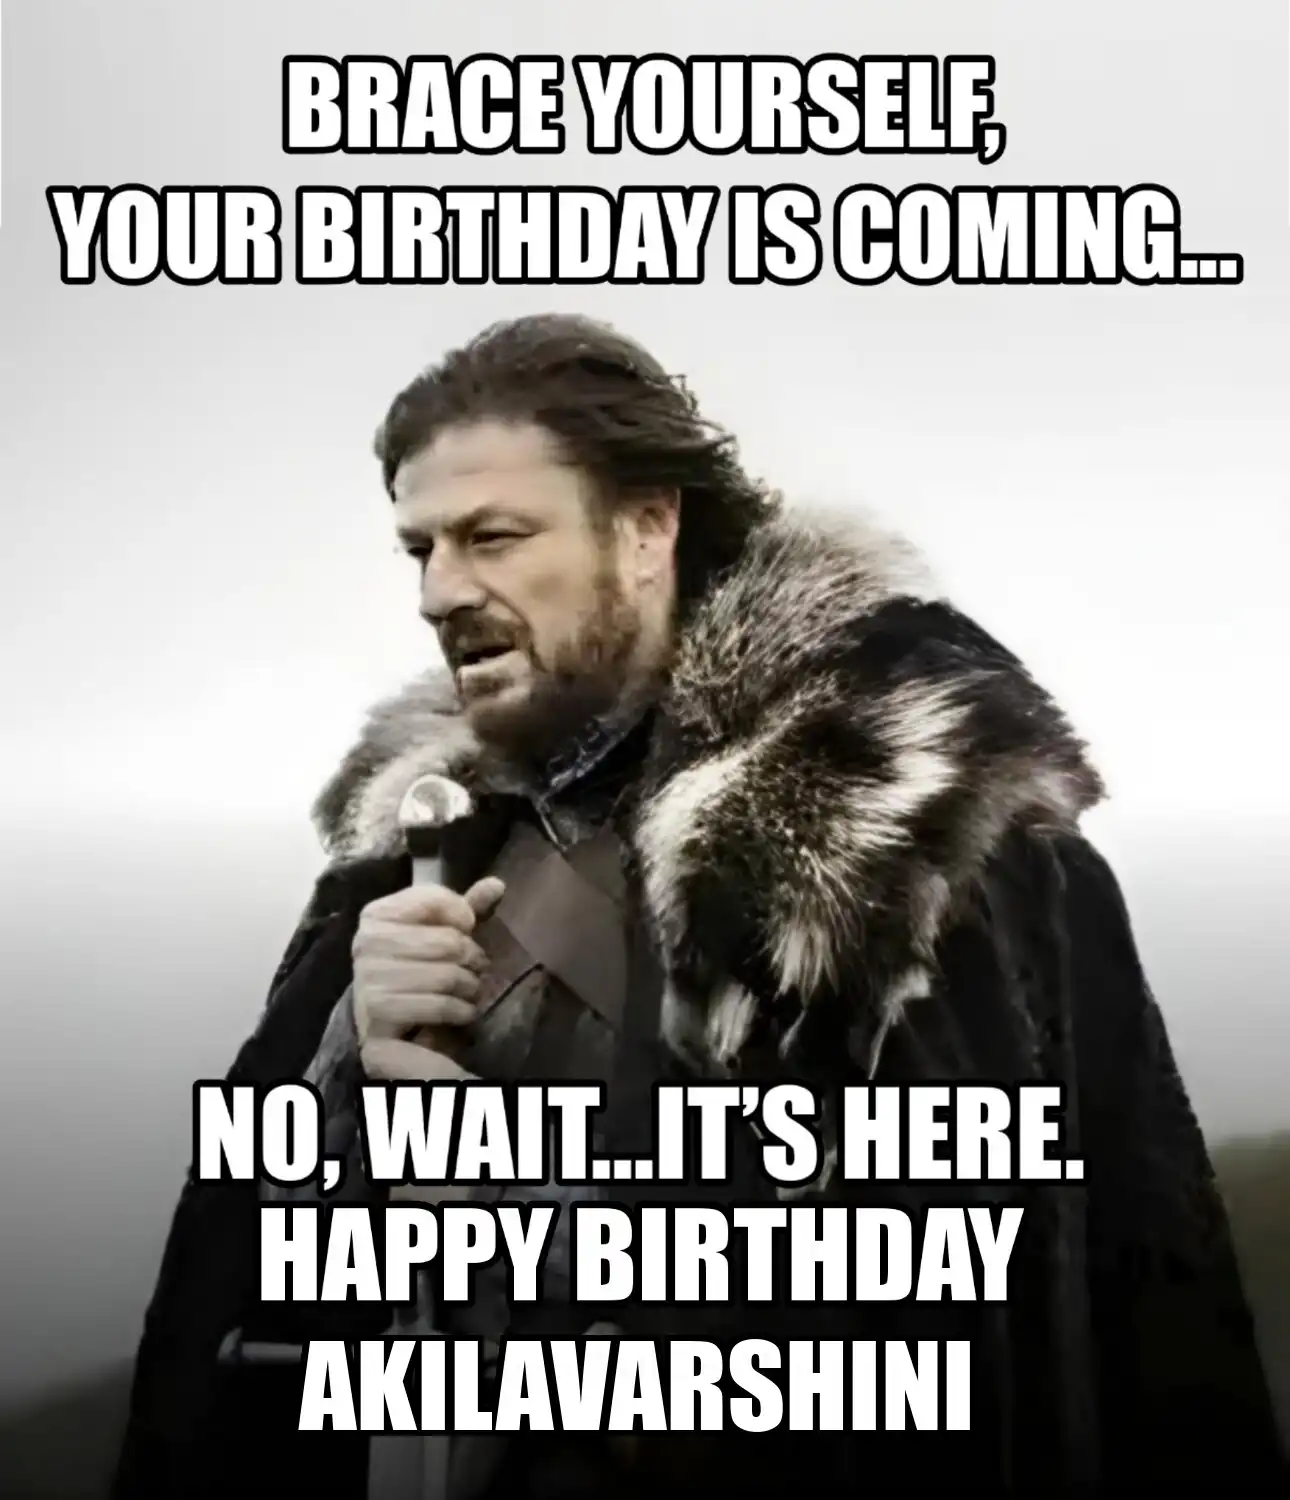 Happy Birthday Akilavarshini Brace Yourself Your Birthday Is Coming Meme